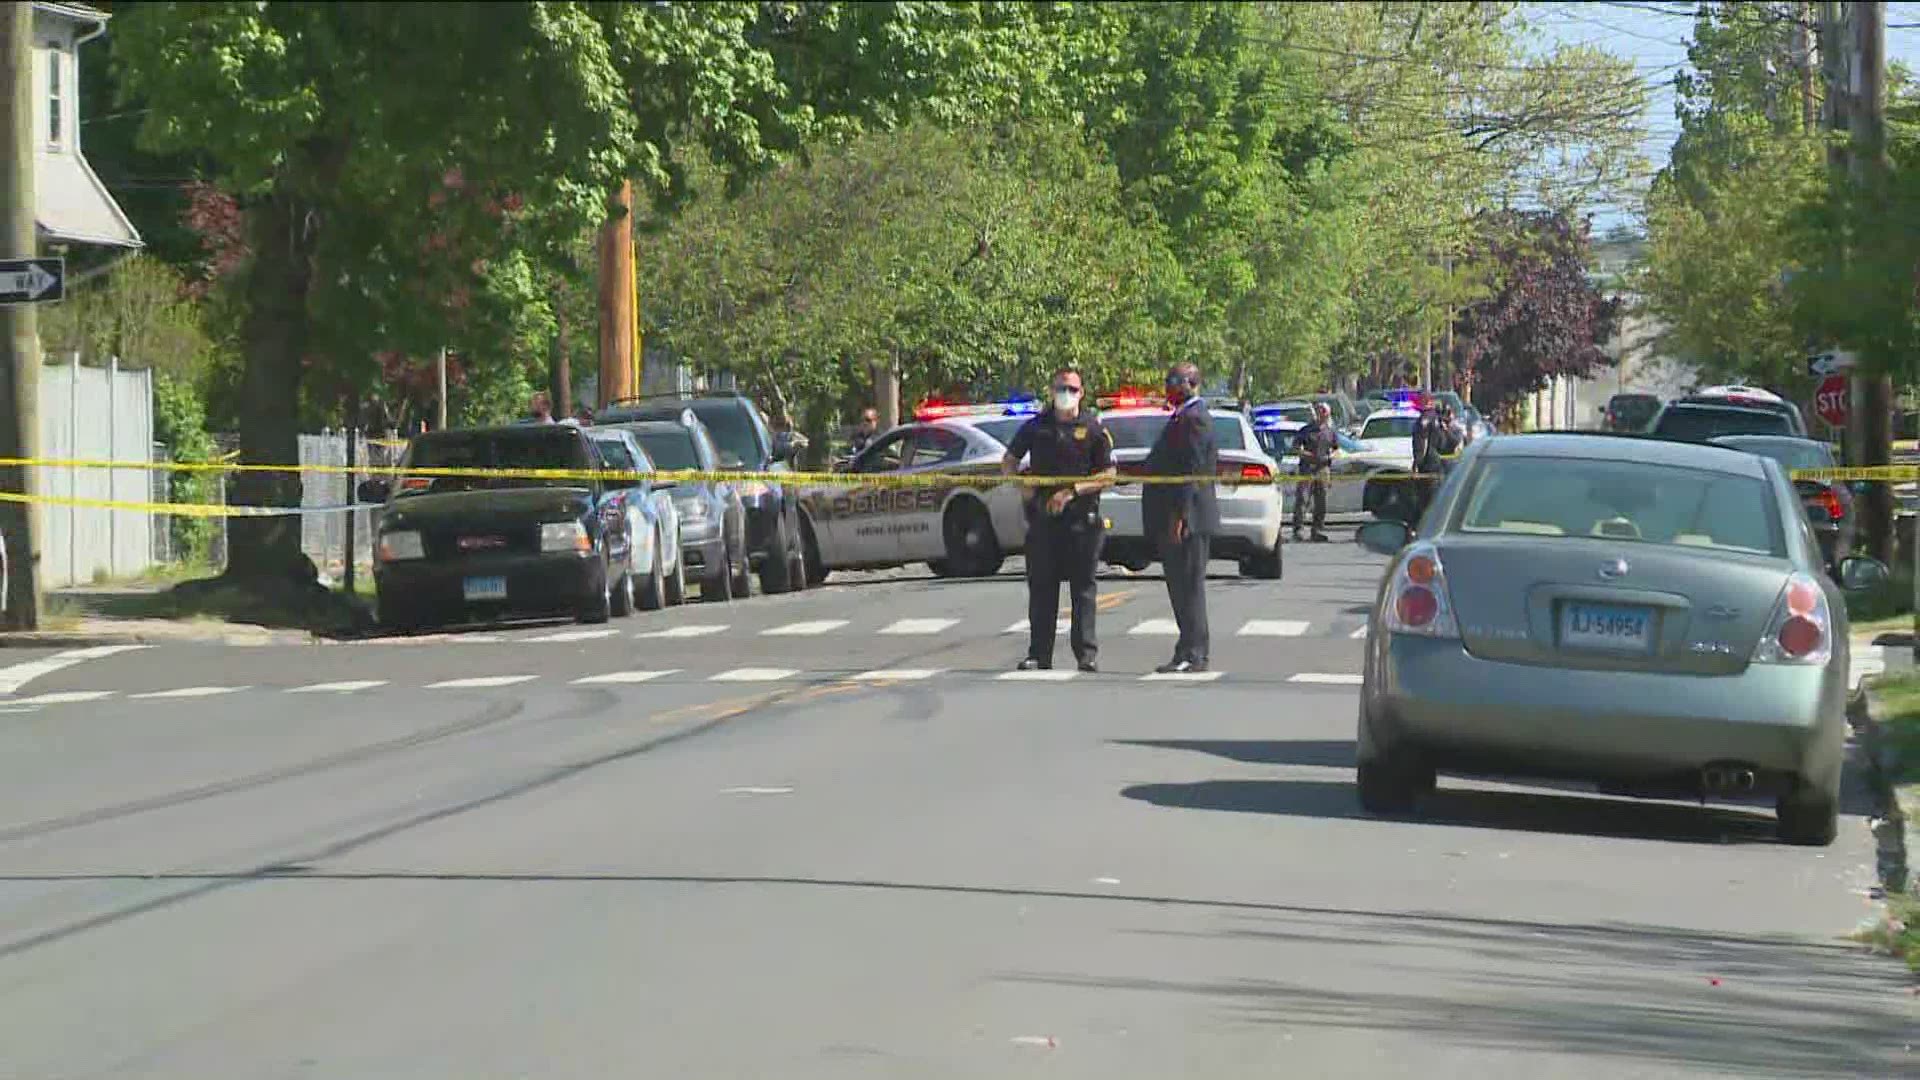 The shooting happened on the corner of Lloyd and Exchange street.